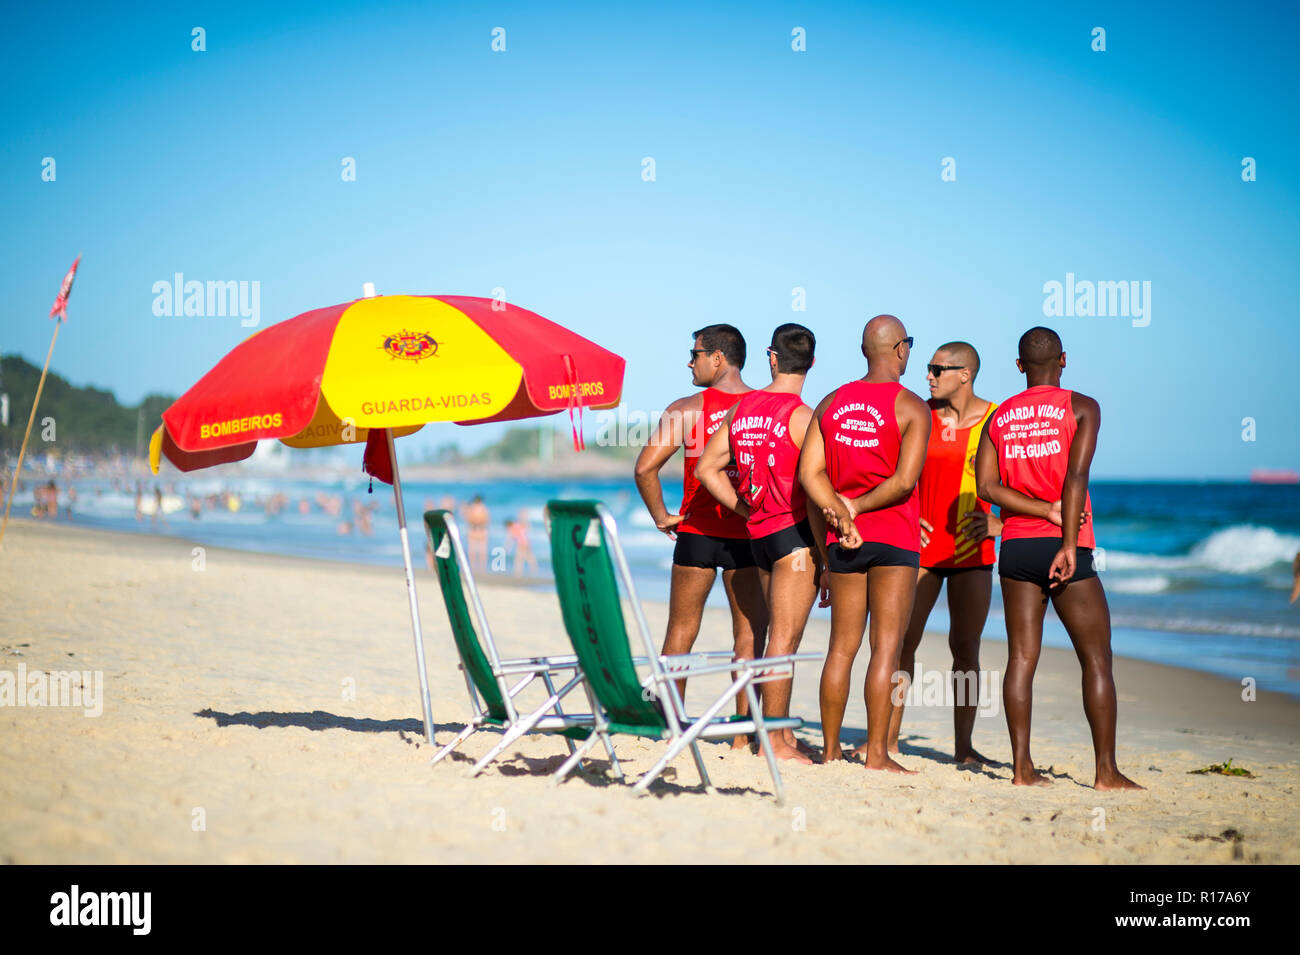 RIO DE JANEIRO - CIRCA FEBRUARY, 2018: A group of lifeguards stand together in uniform on Ipanema Beach next to an umbrella Stock Photo